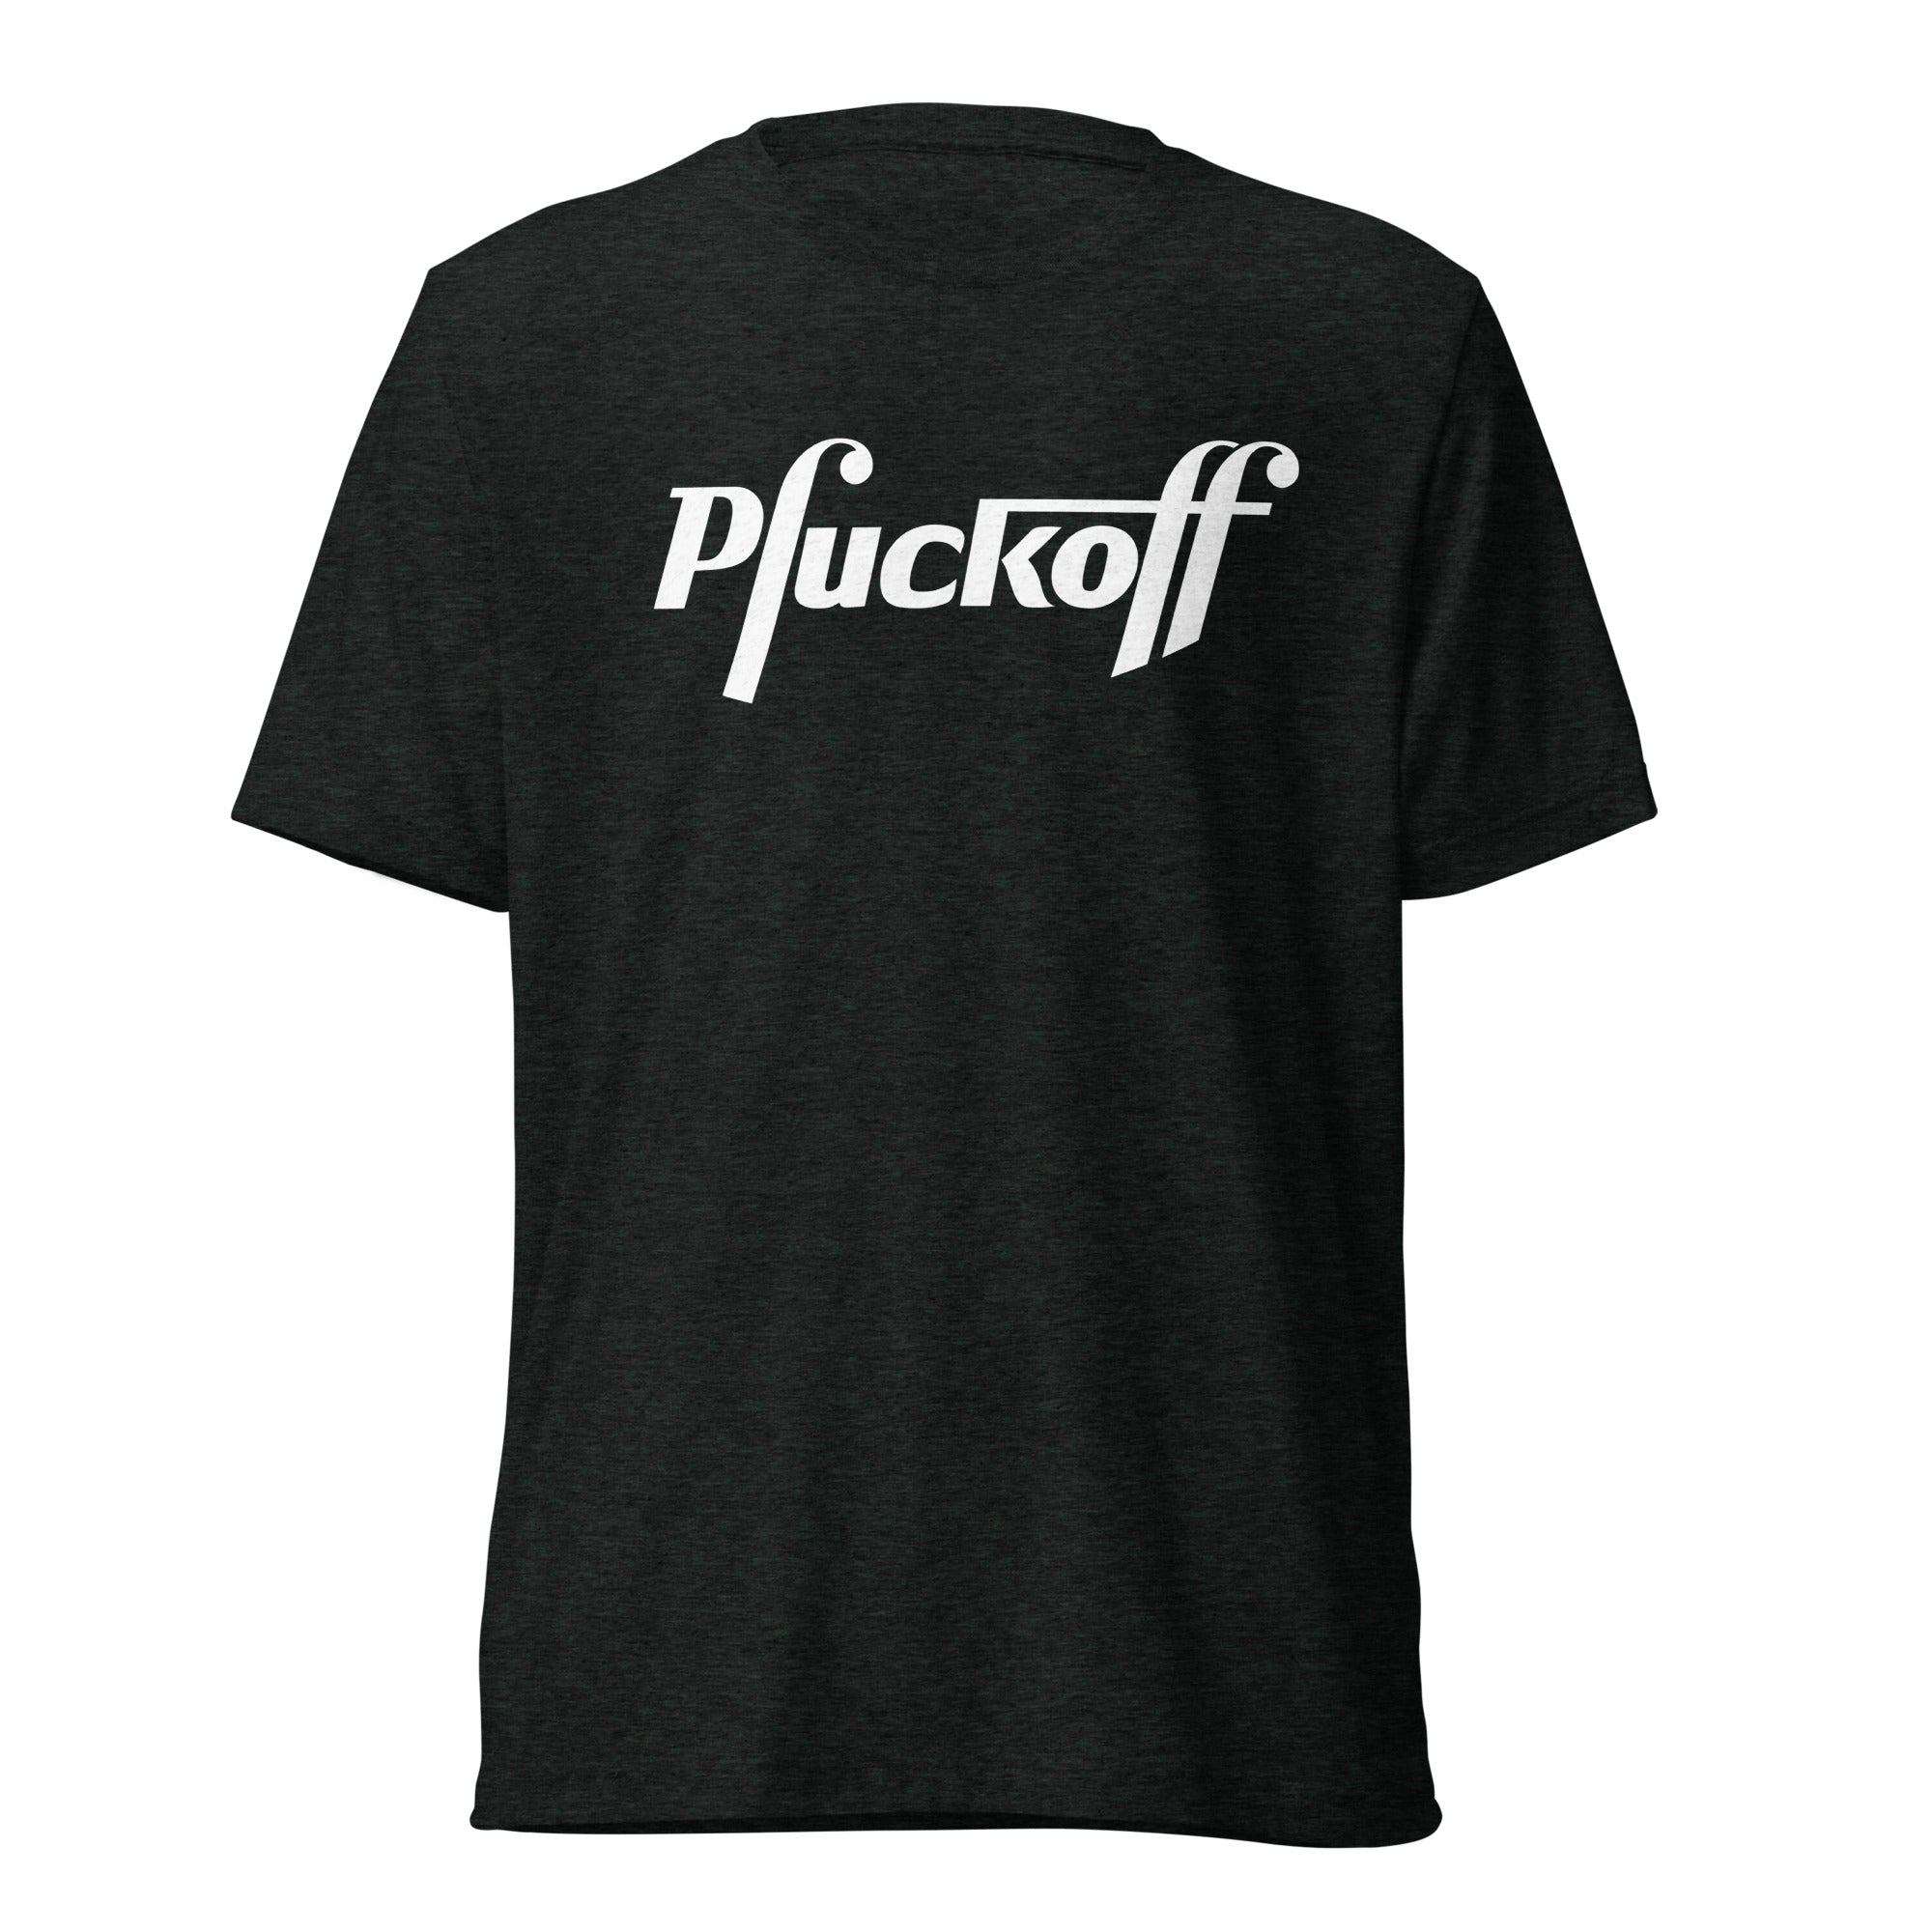 Pfuckoff Tri-blend Shirt